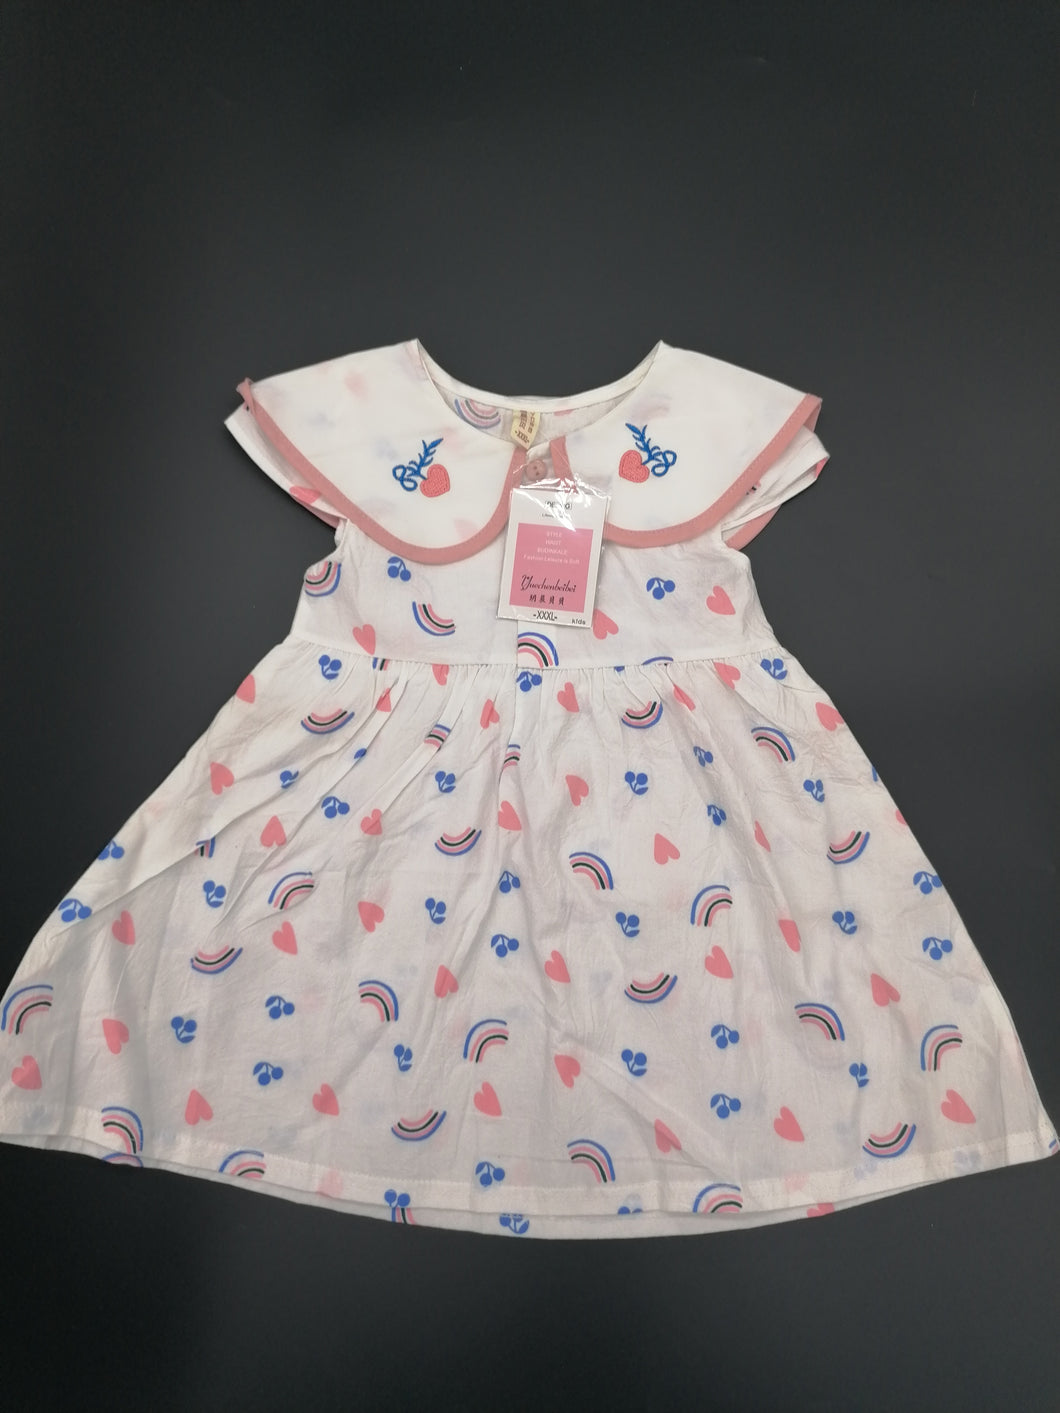 Classic Shirley Temple Girls Cotton Dress